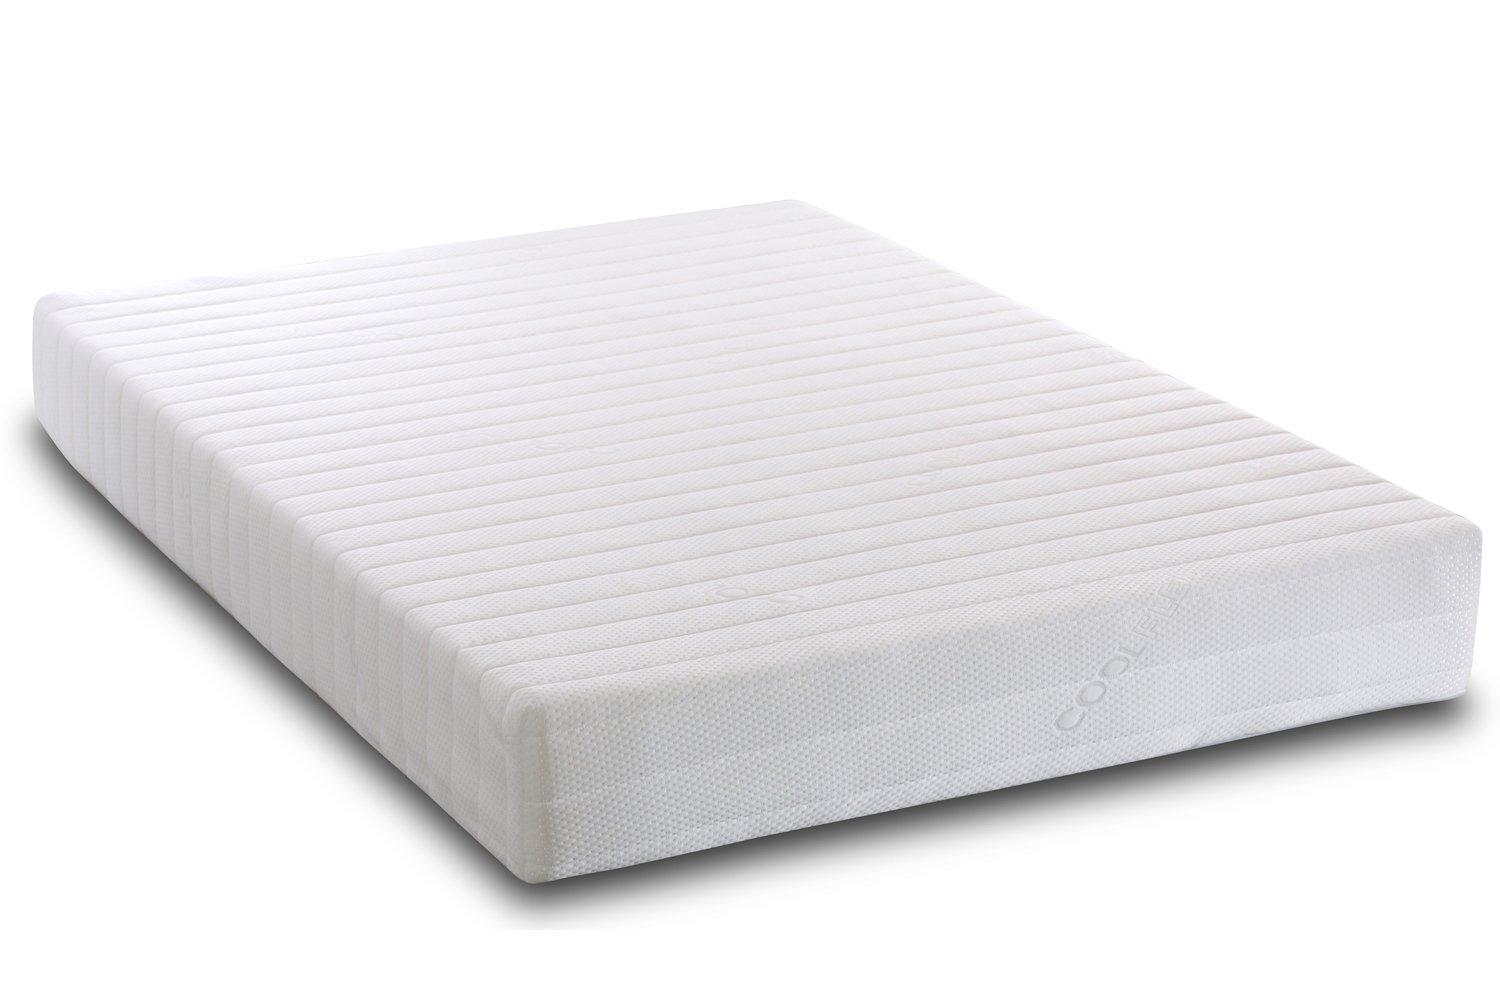 FOAMEX Recon Silent Foam Cleanable Cover Firm Mattress 10cm